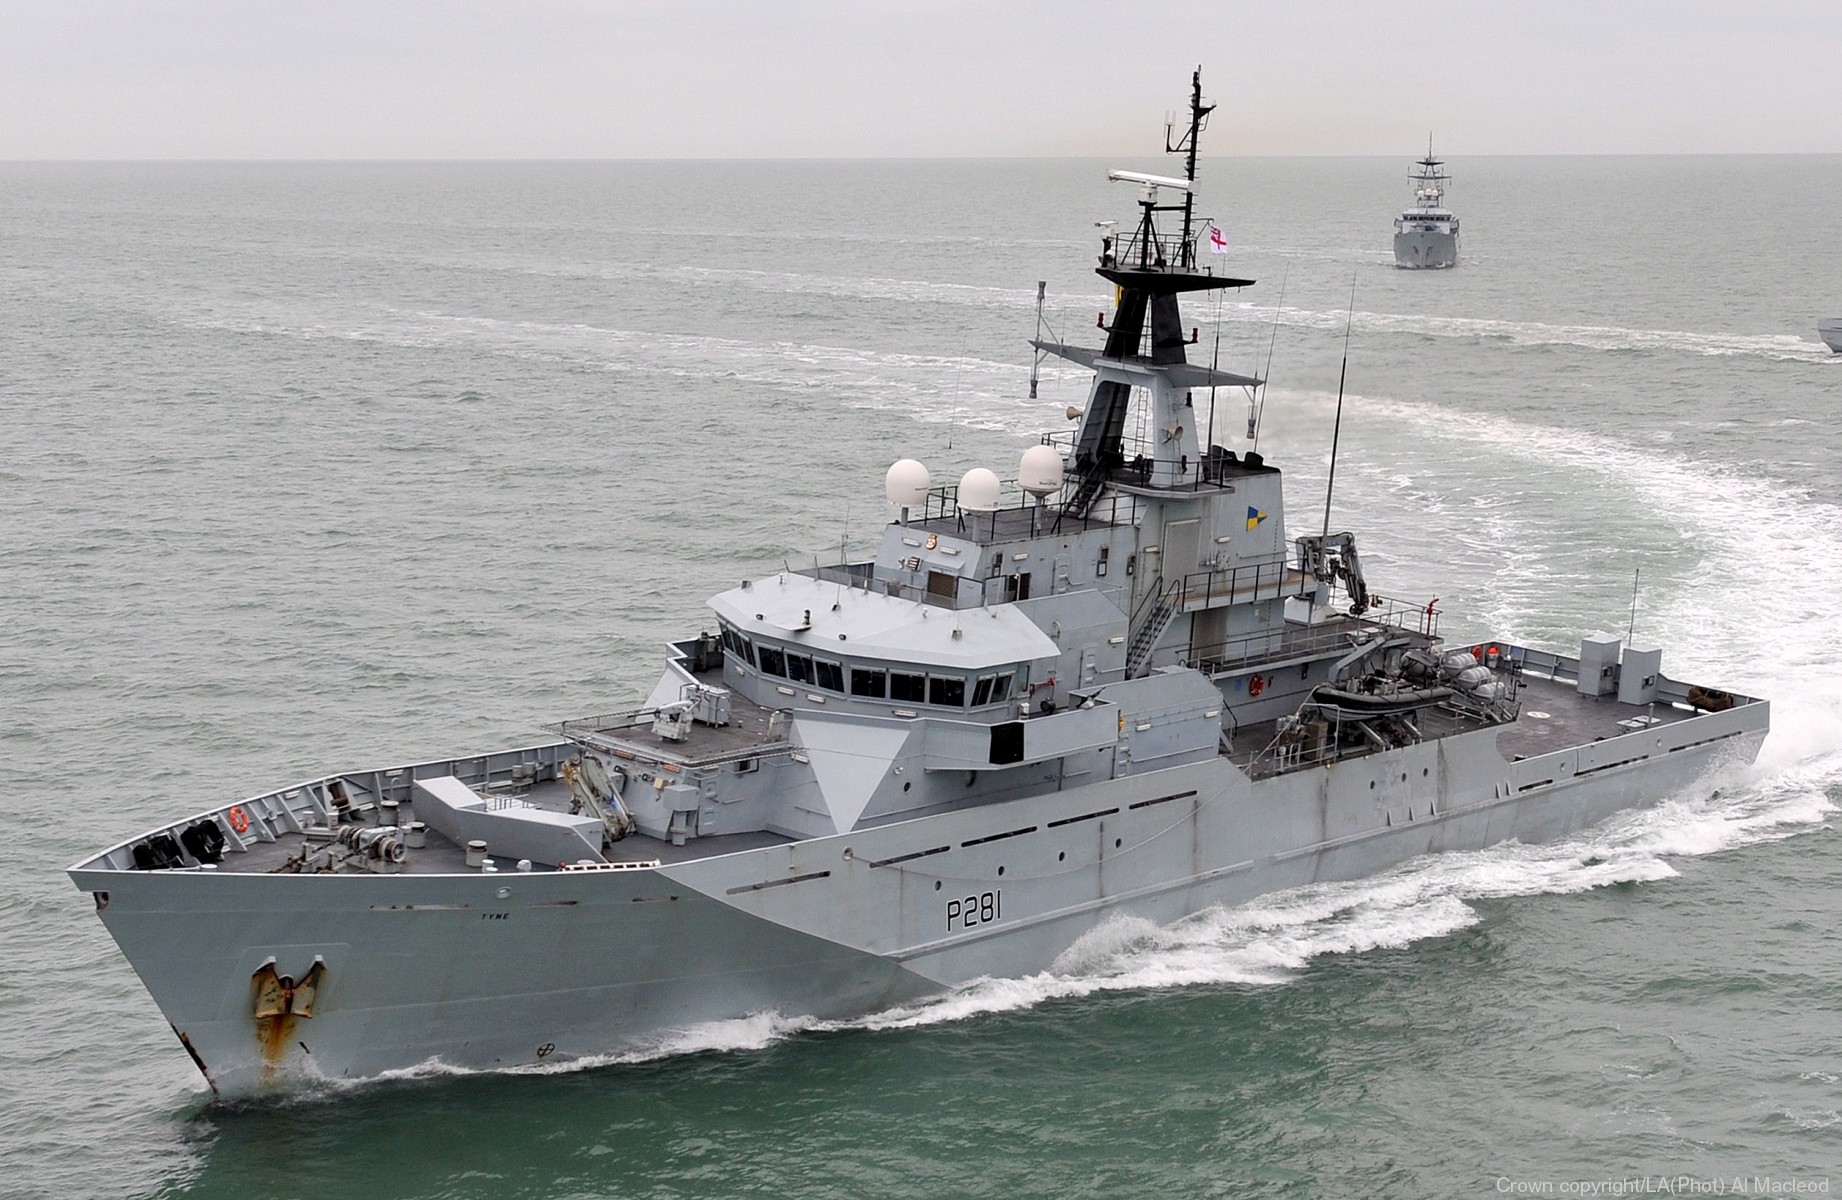 hms tyne p 281 river class offshore patrol vessel royal navy